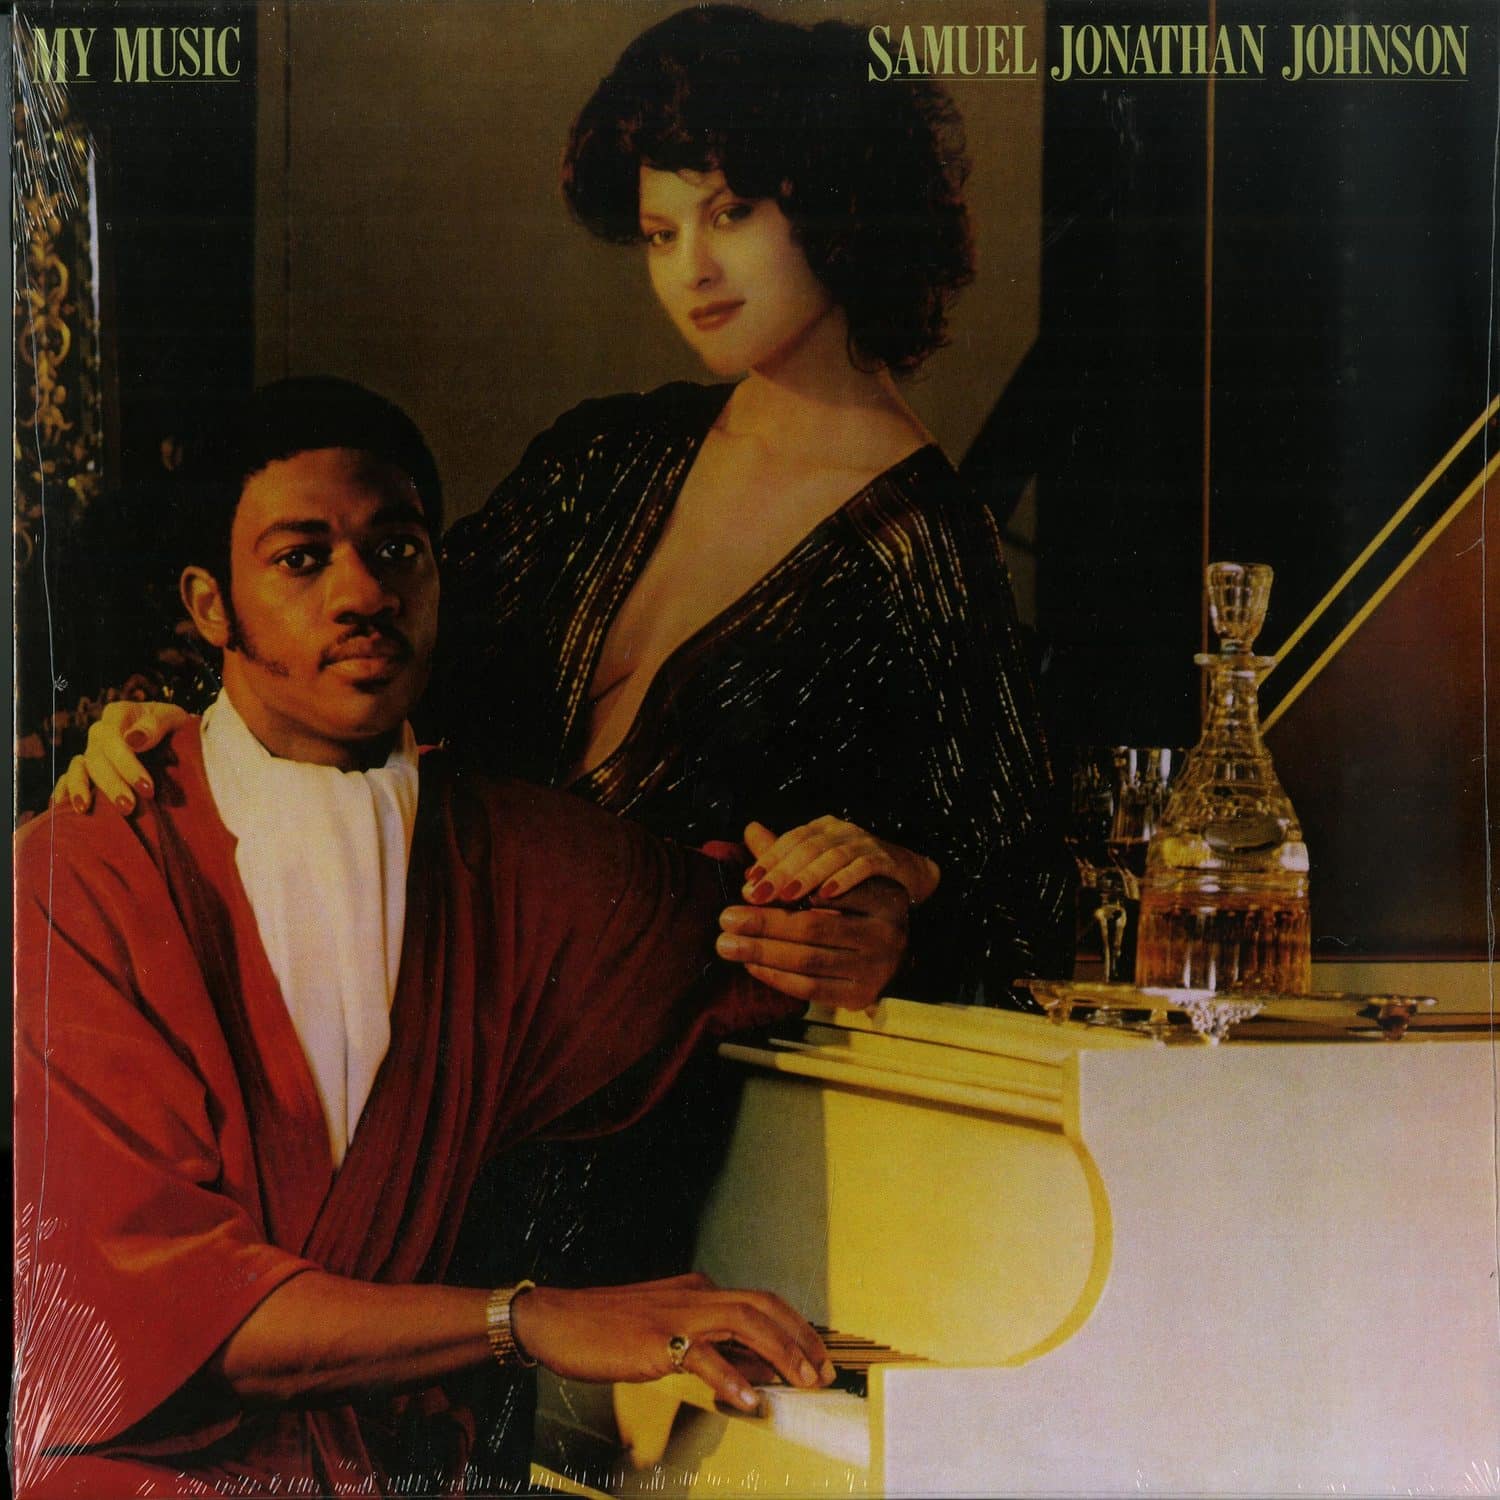 Samuel Jonathan Johnson - MY MUSIC 